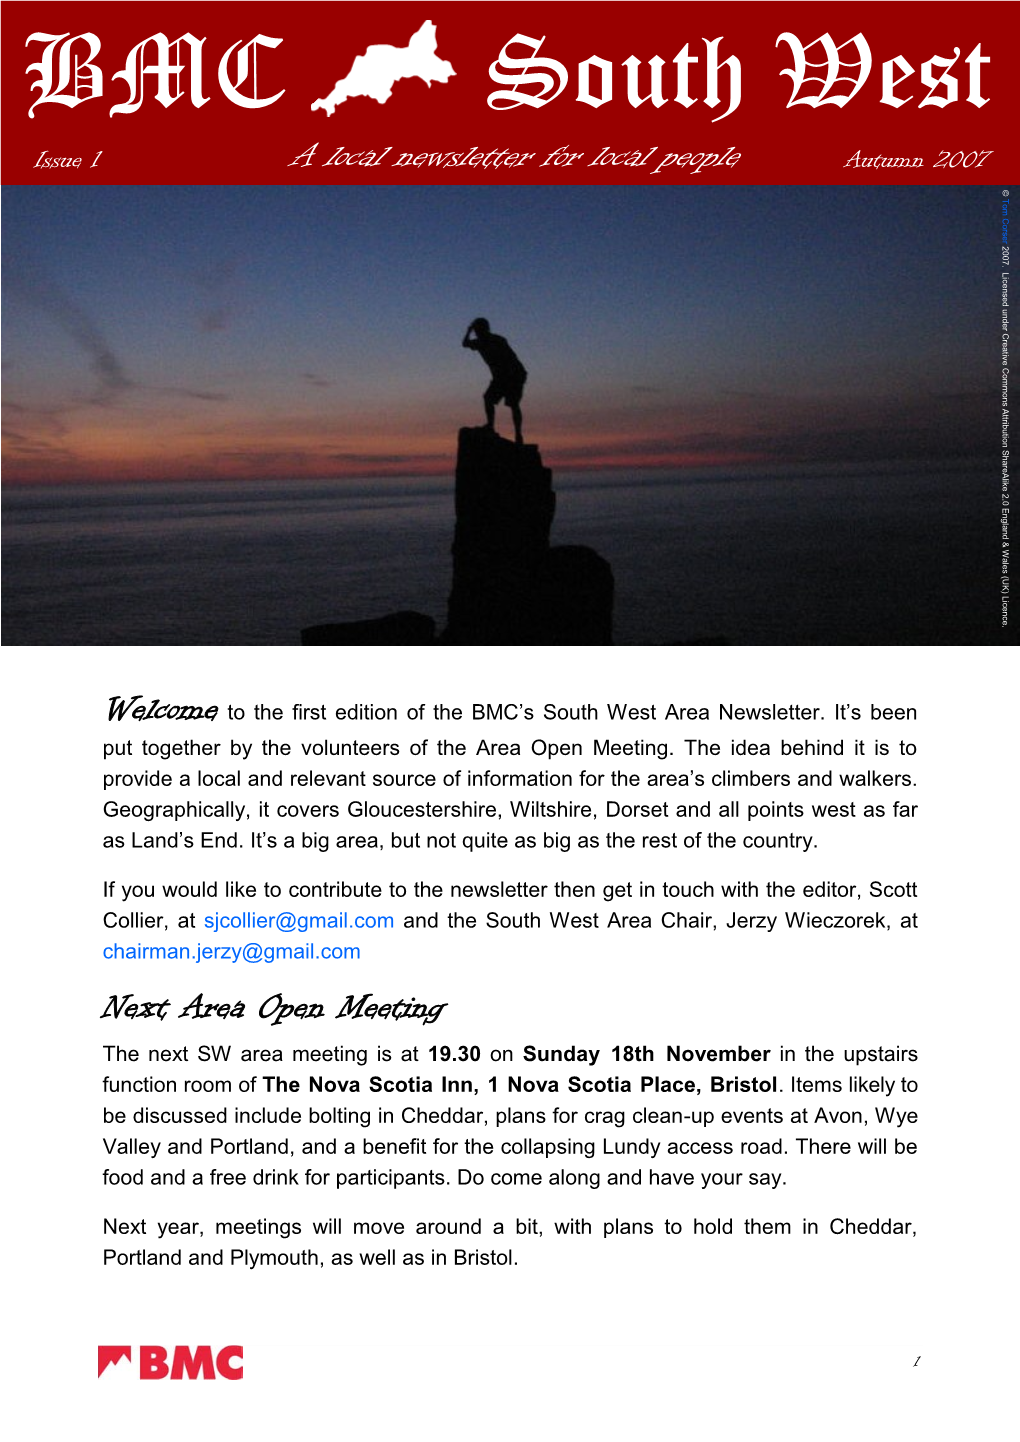 BMC South West Newsletter South Westautumn 2007